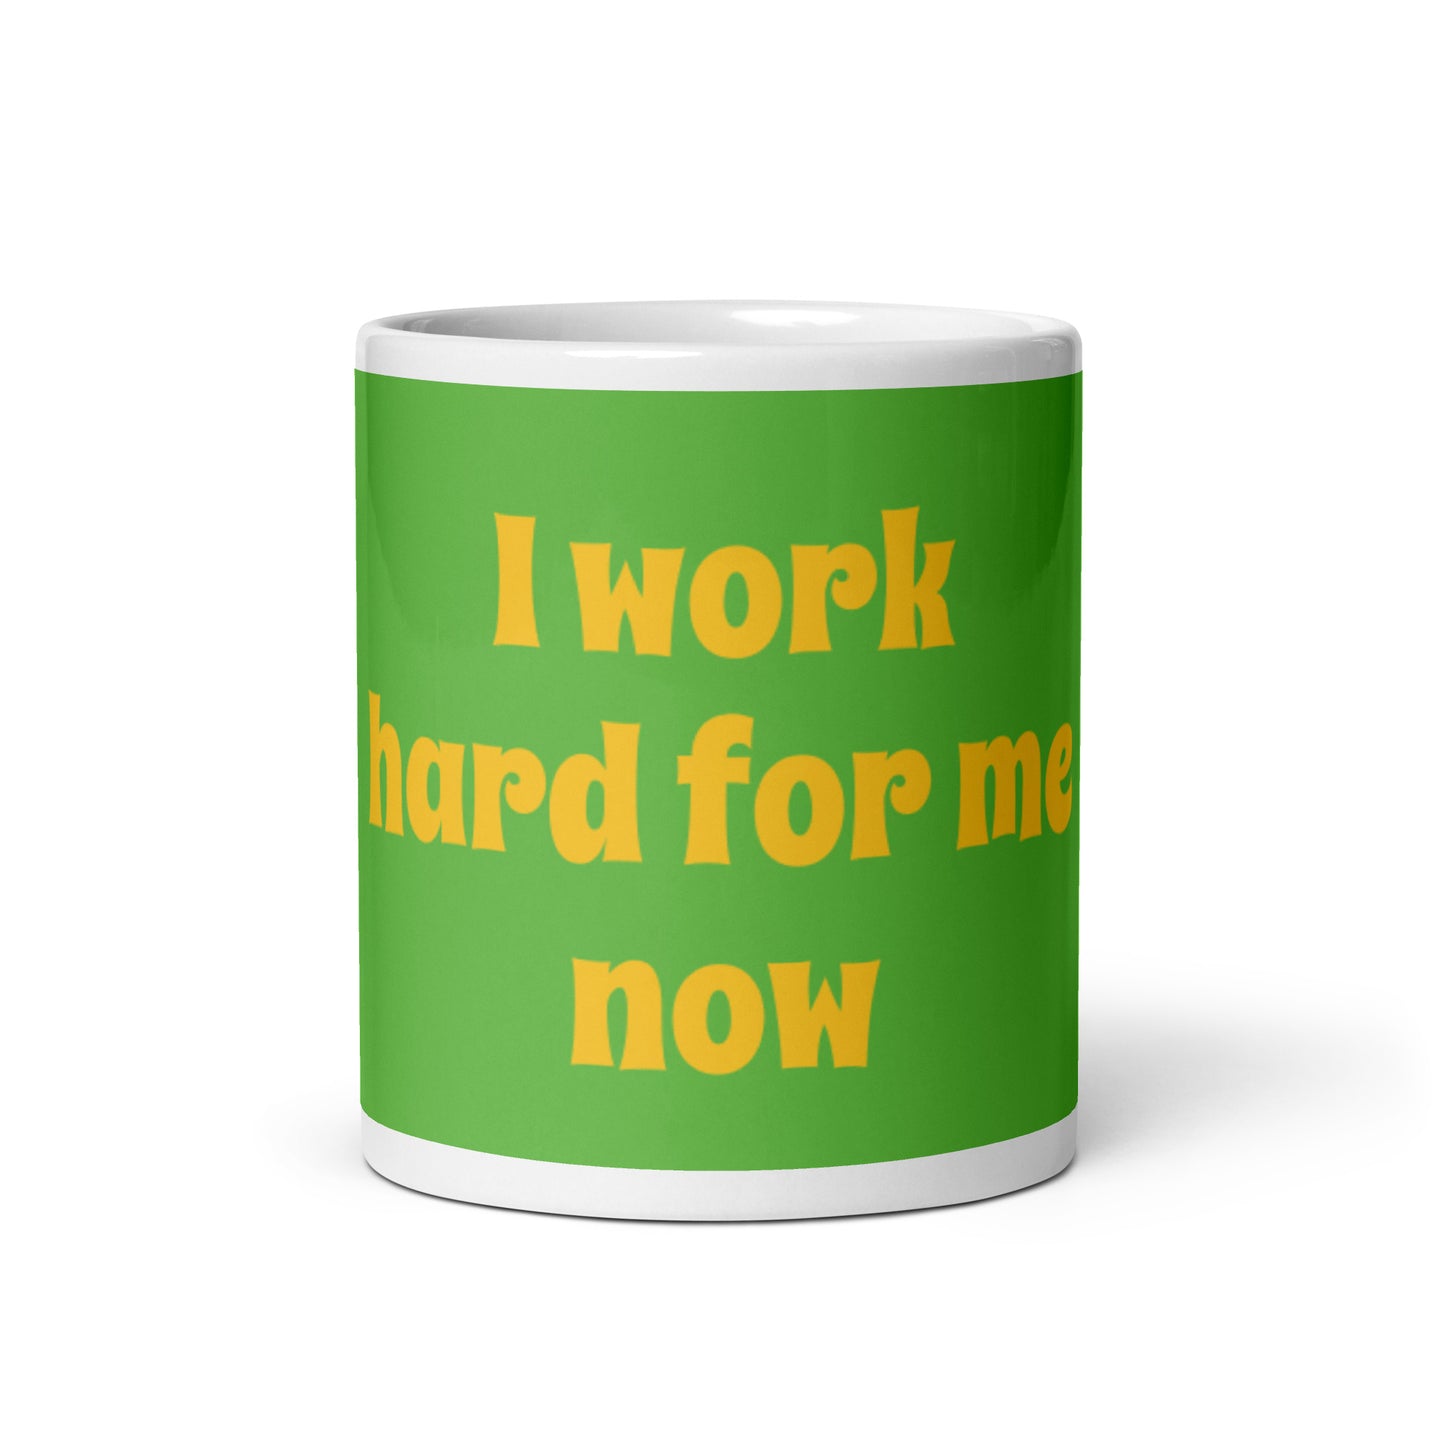 Grinch White Glossy Mug - I work hard for me now